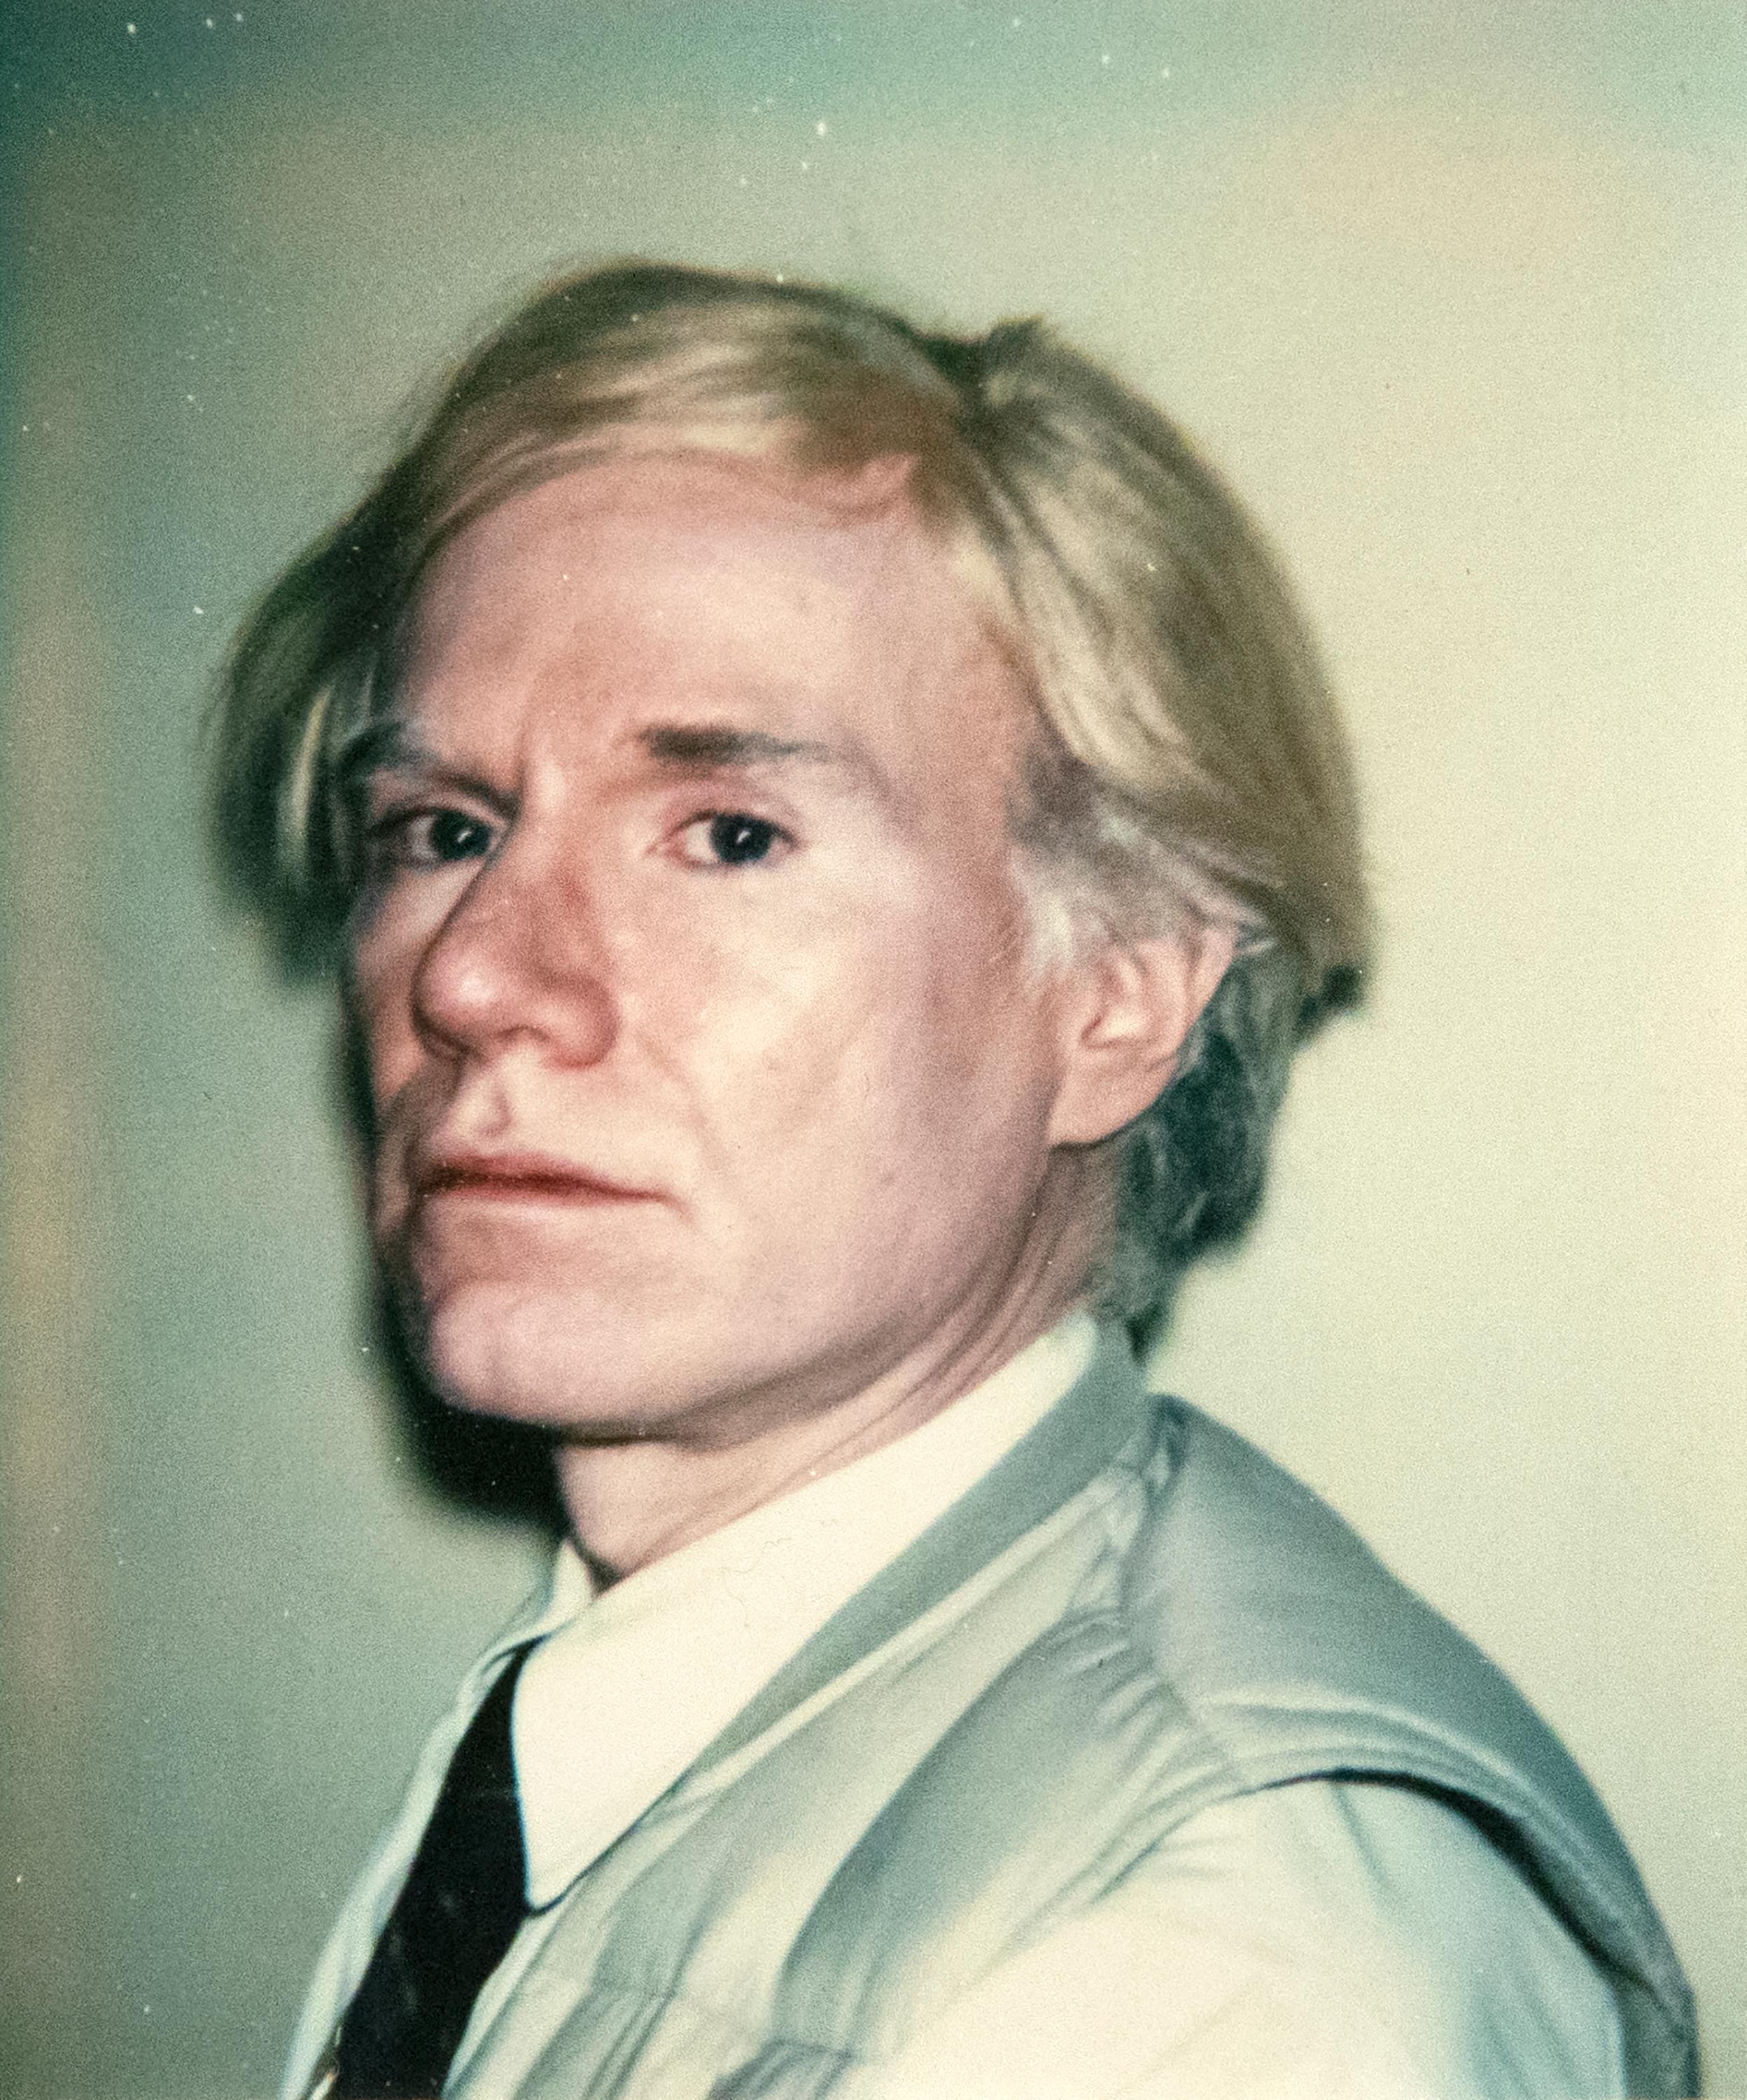 Andy Warhol Portrait Photograph - Any Warhol Self-Portrait